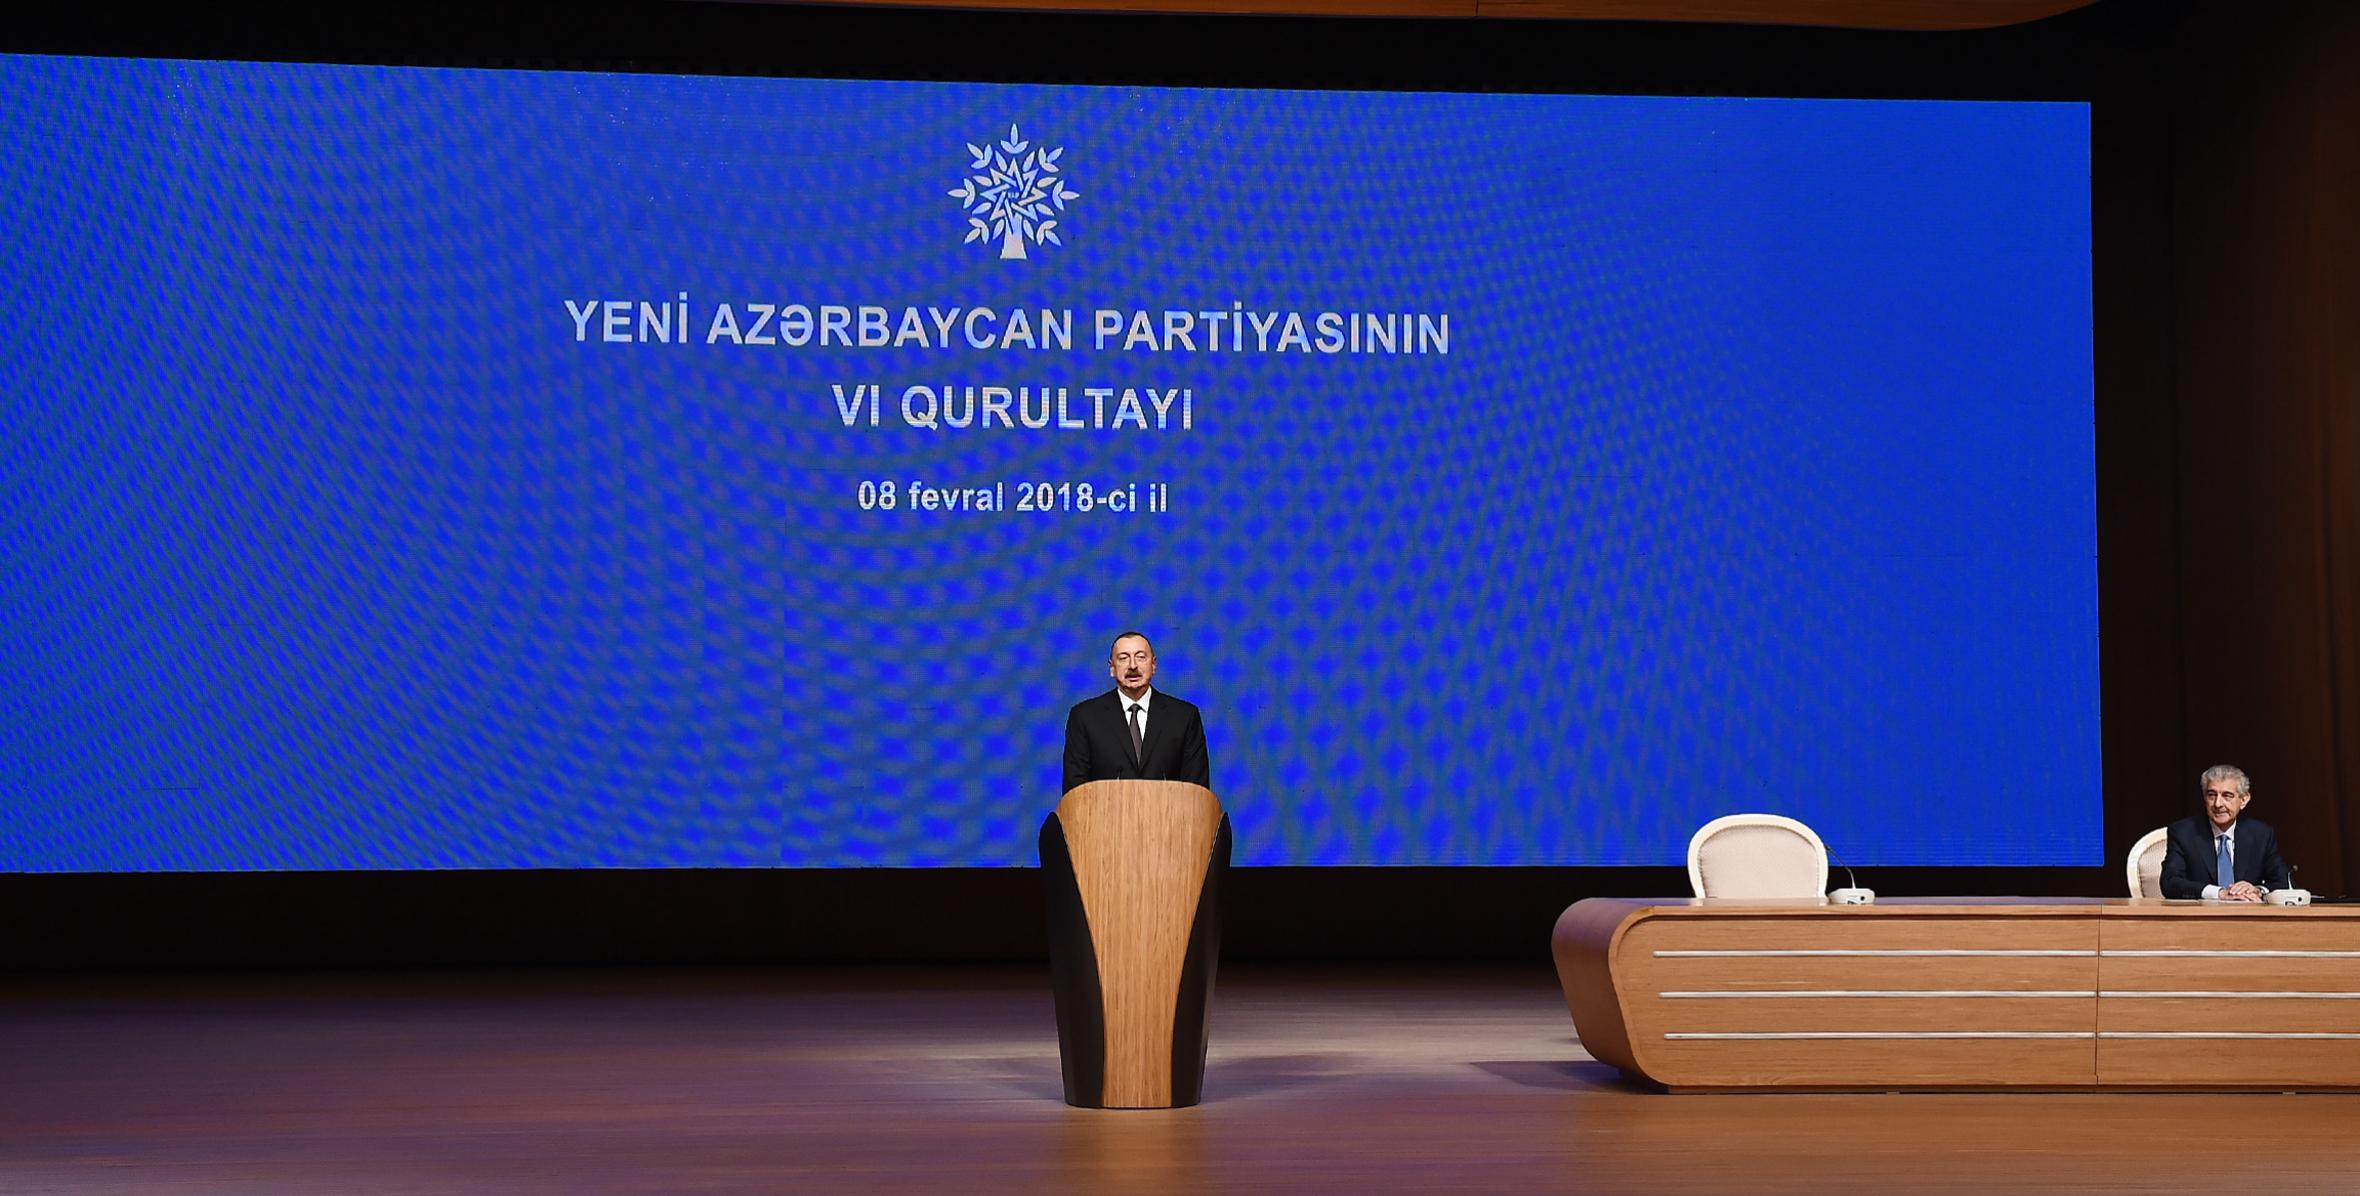 6th Congress of New Azerbaijan Party held in Baku